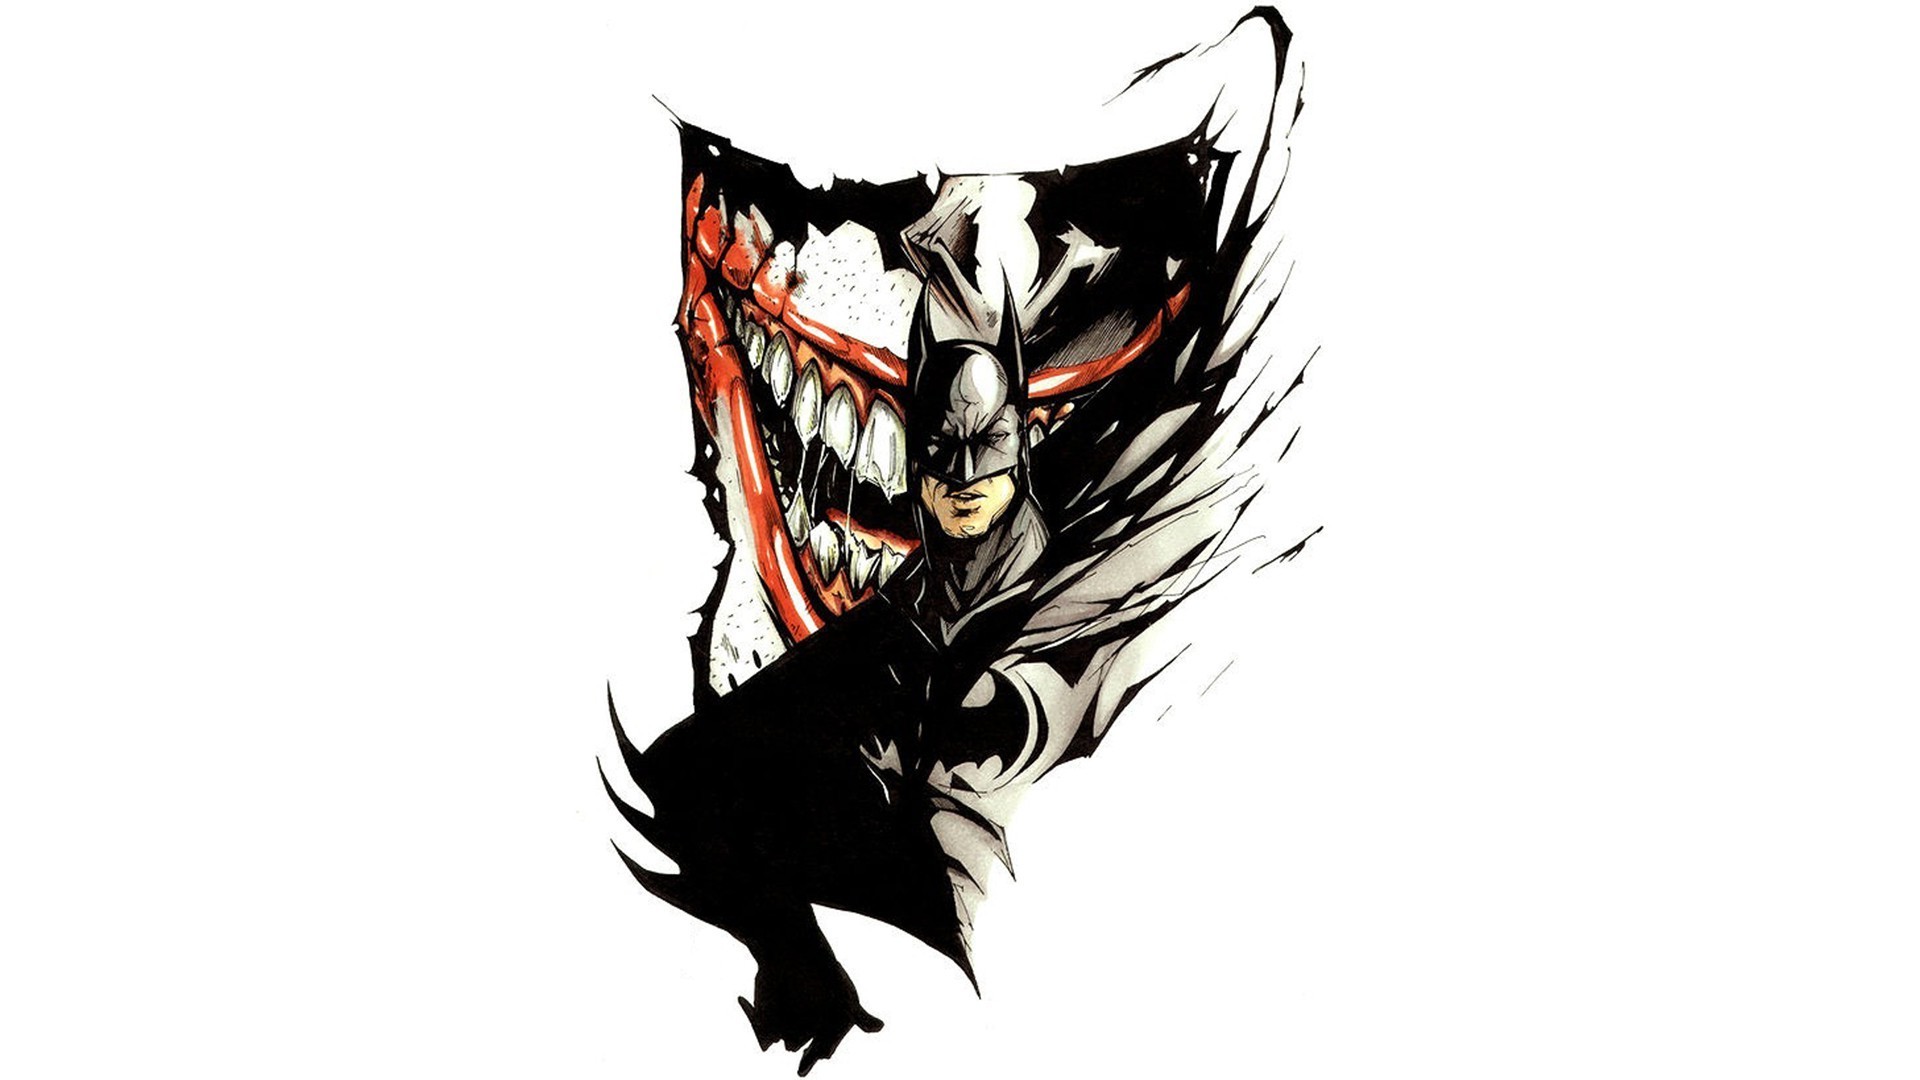 Batman joker wallpaper for mobile hd download